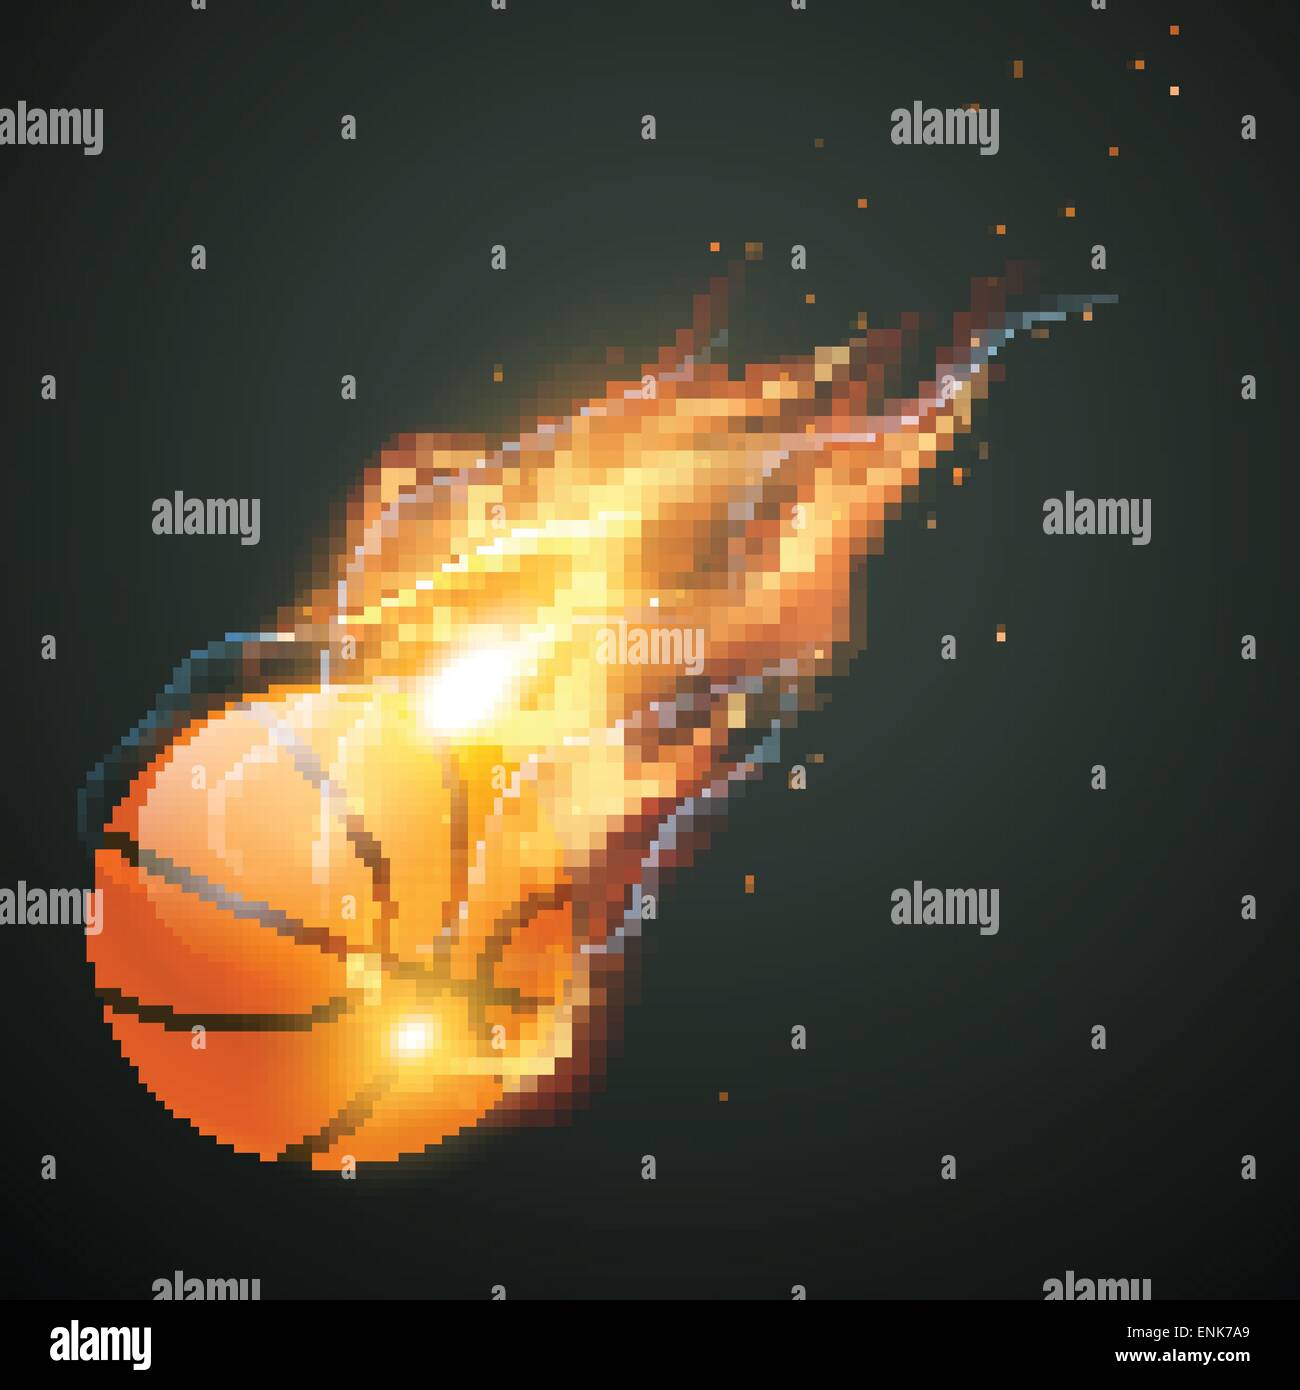 vector burning basketball illustration Stock Vector